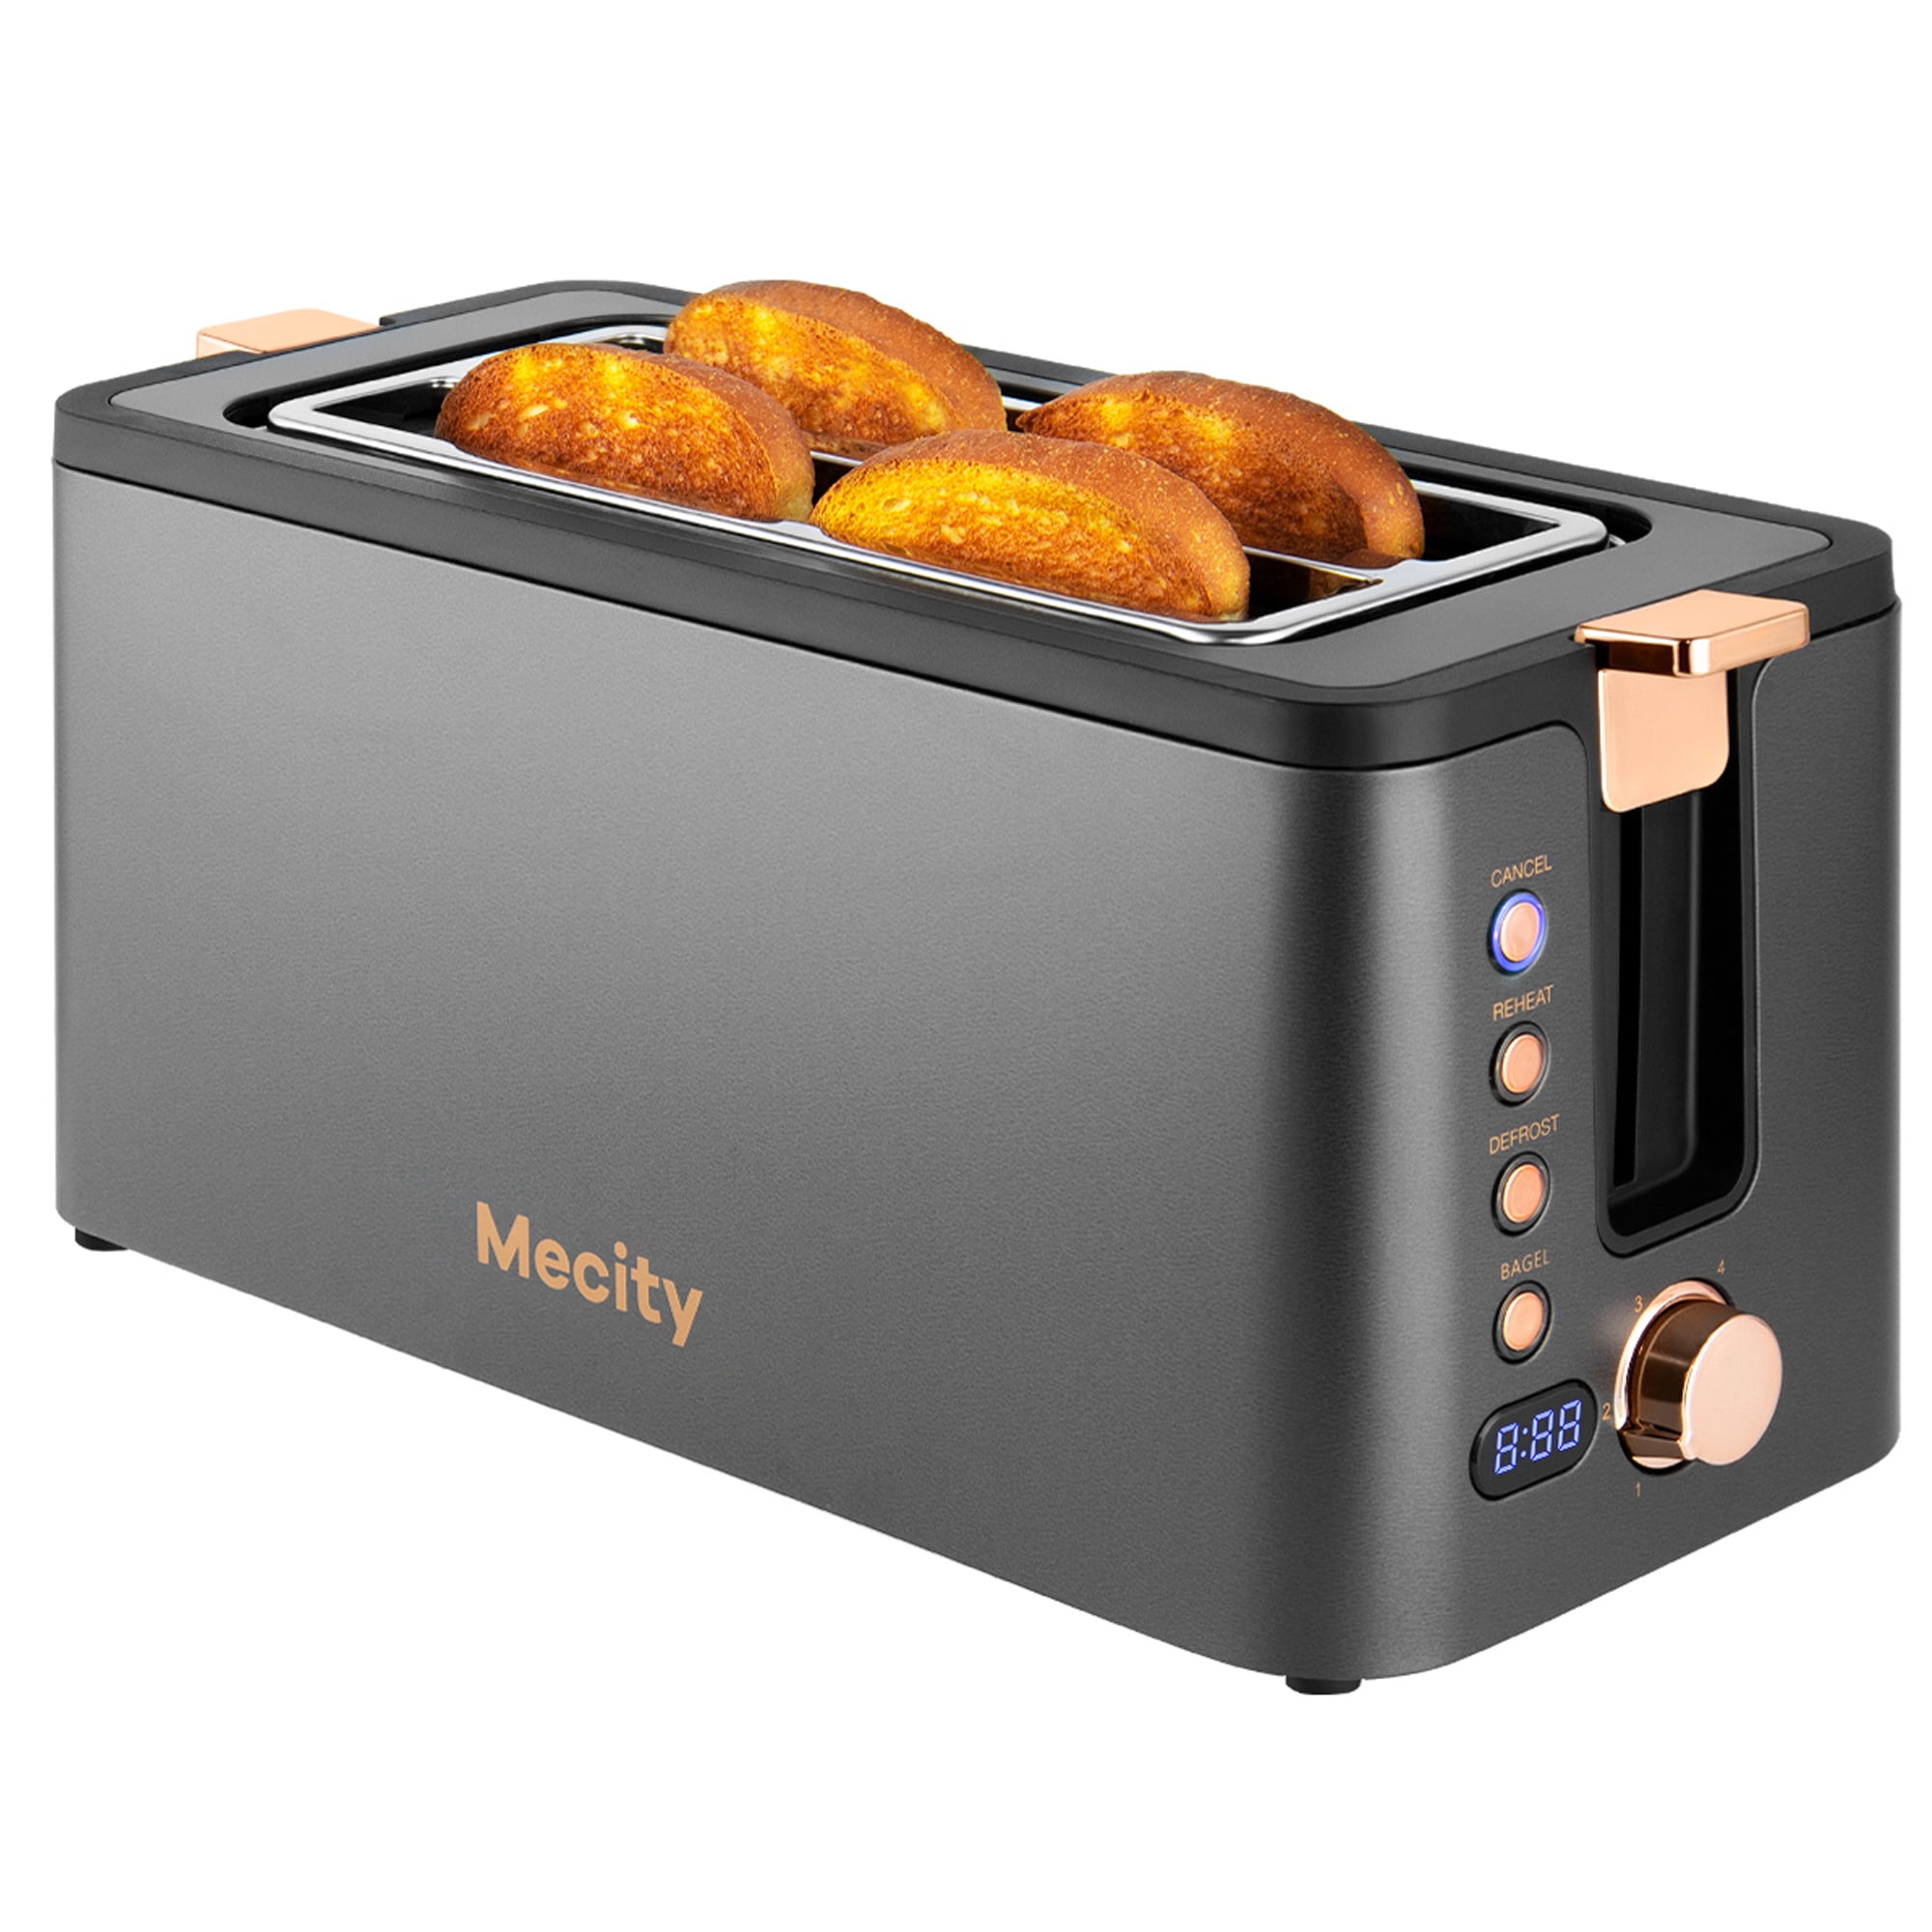 Elite Gourmet 4 Slice Toaster ECT-3100# Long Slot, Reheat, 6 Toast  Settings, Defrost